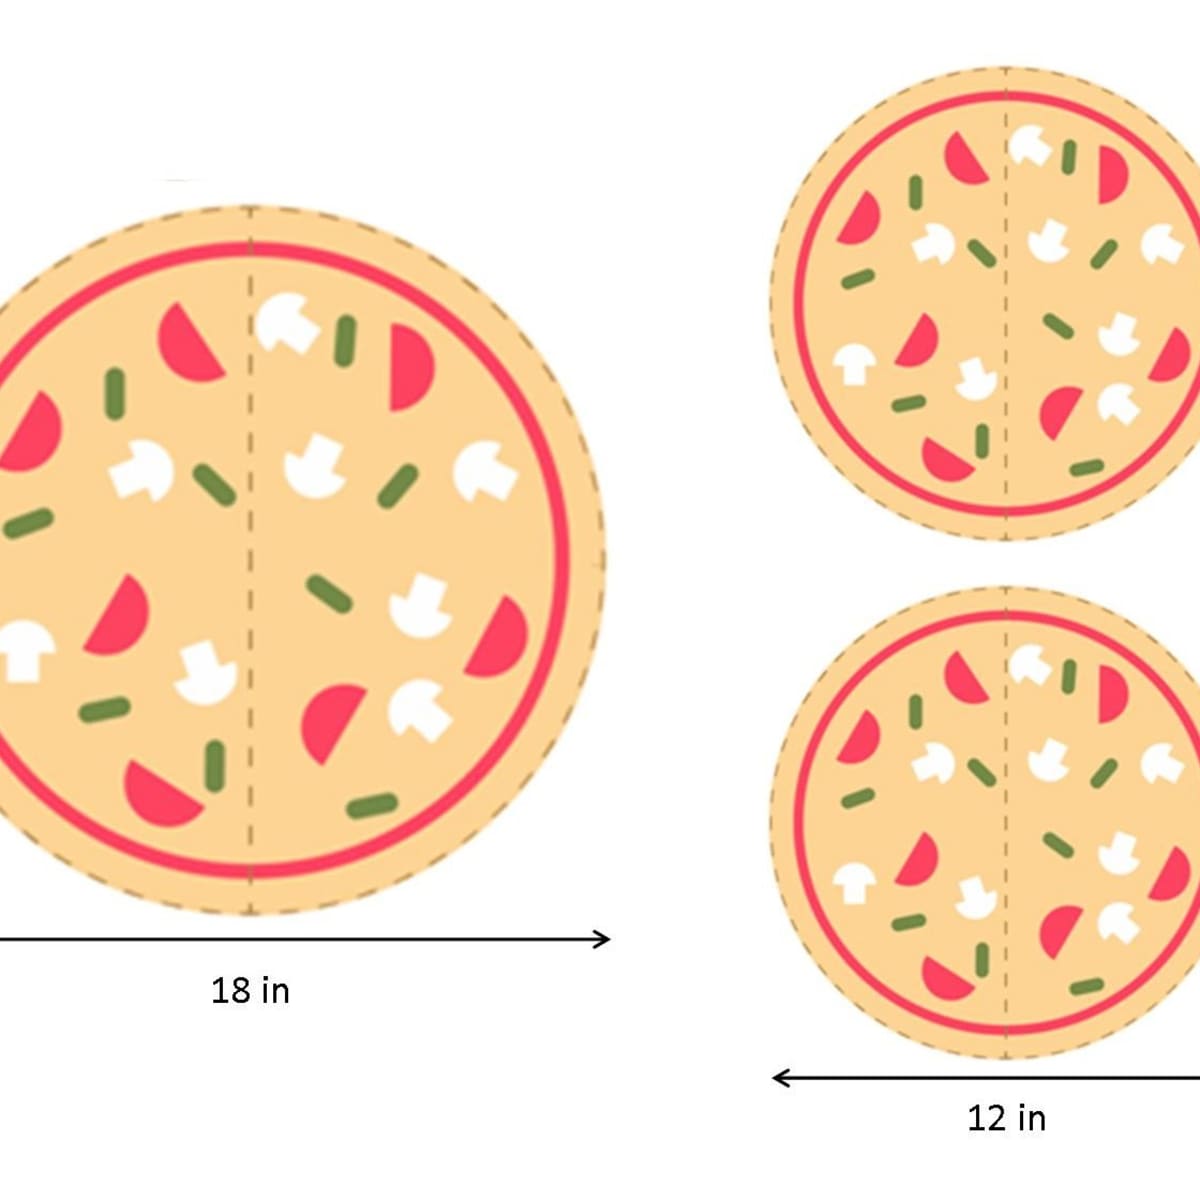 1 2 pizza clipart images